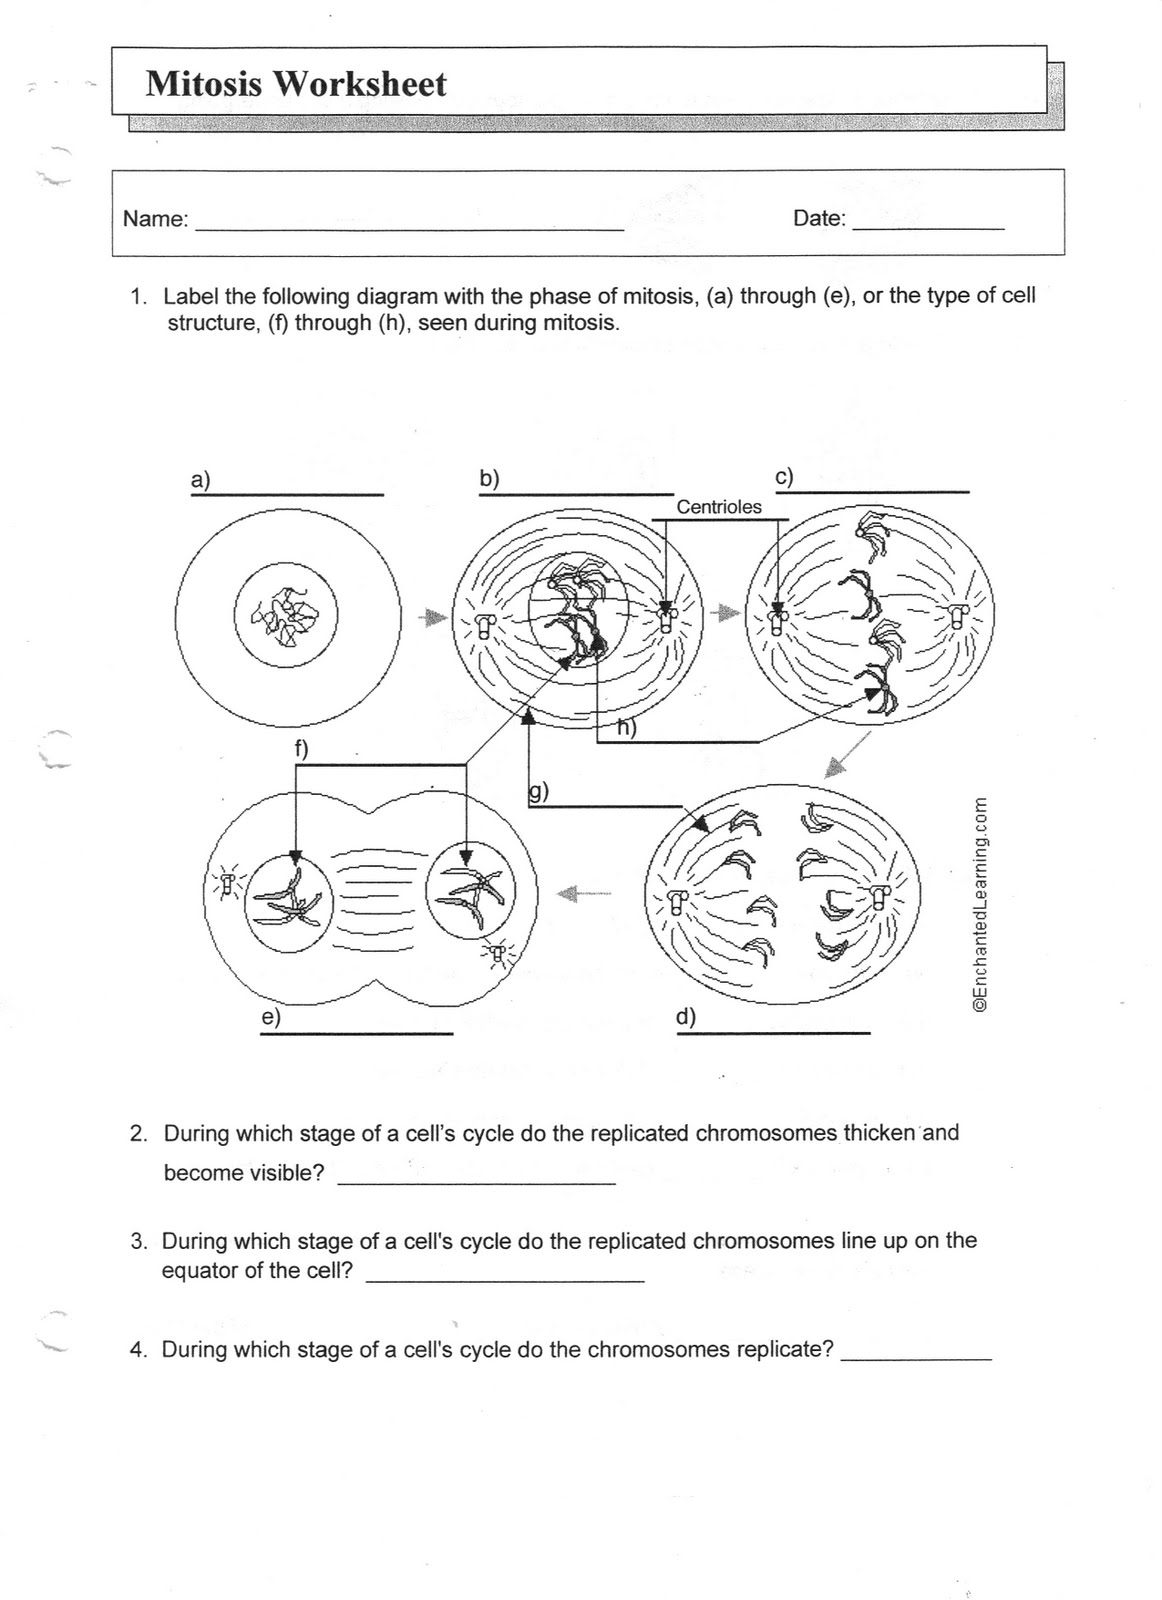 meiosis-matching-worksheet-key